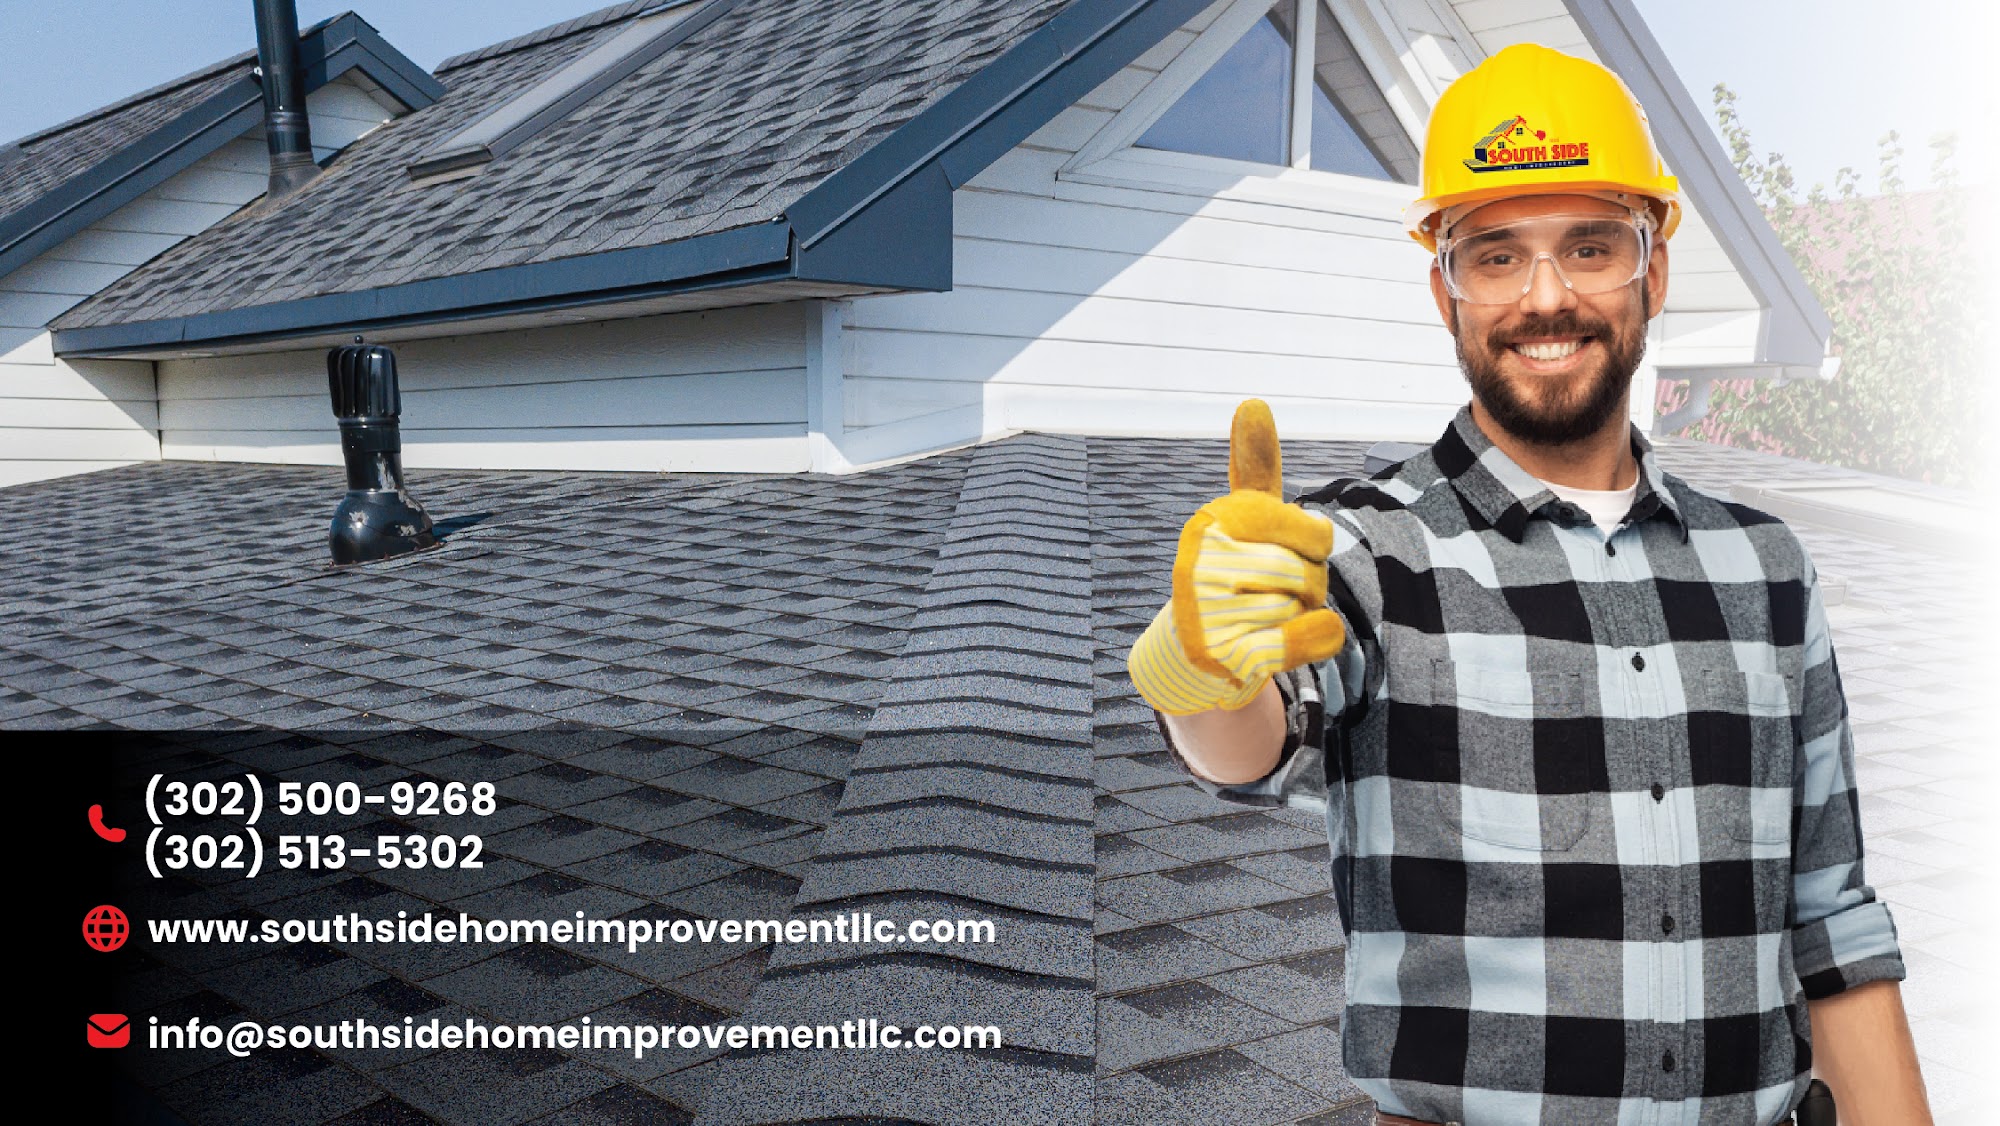 South Side Home Improvement LLC